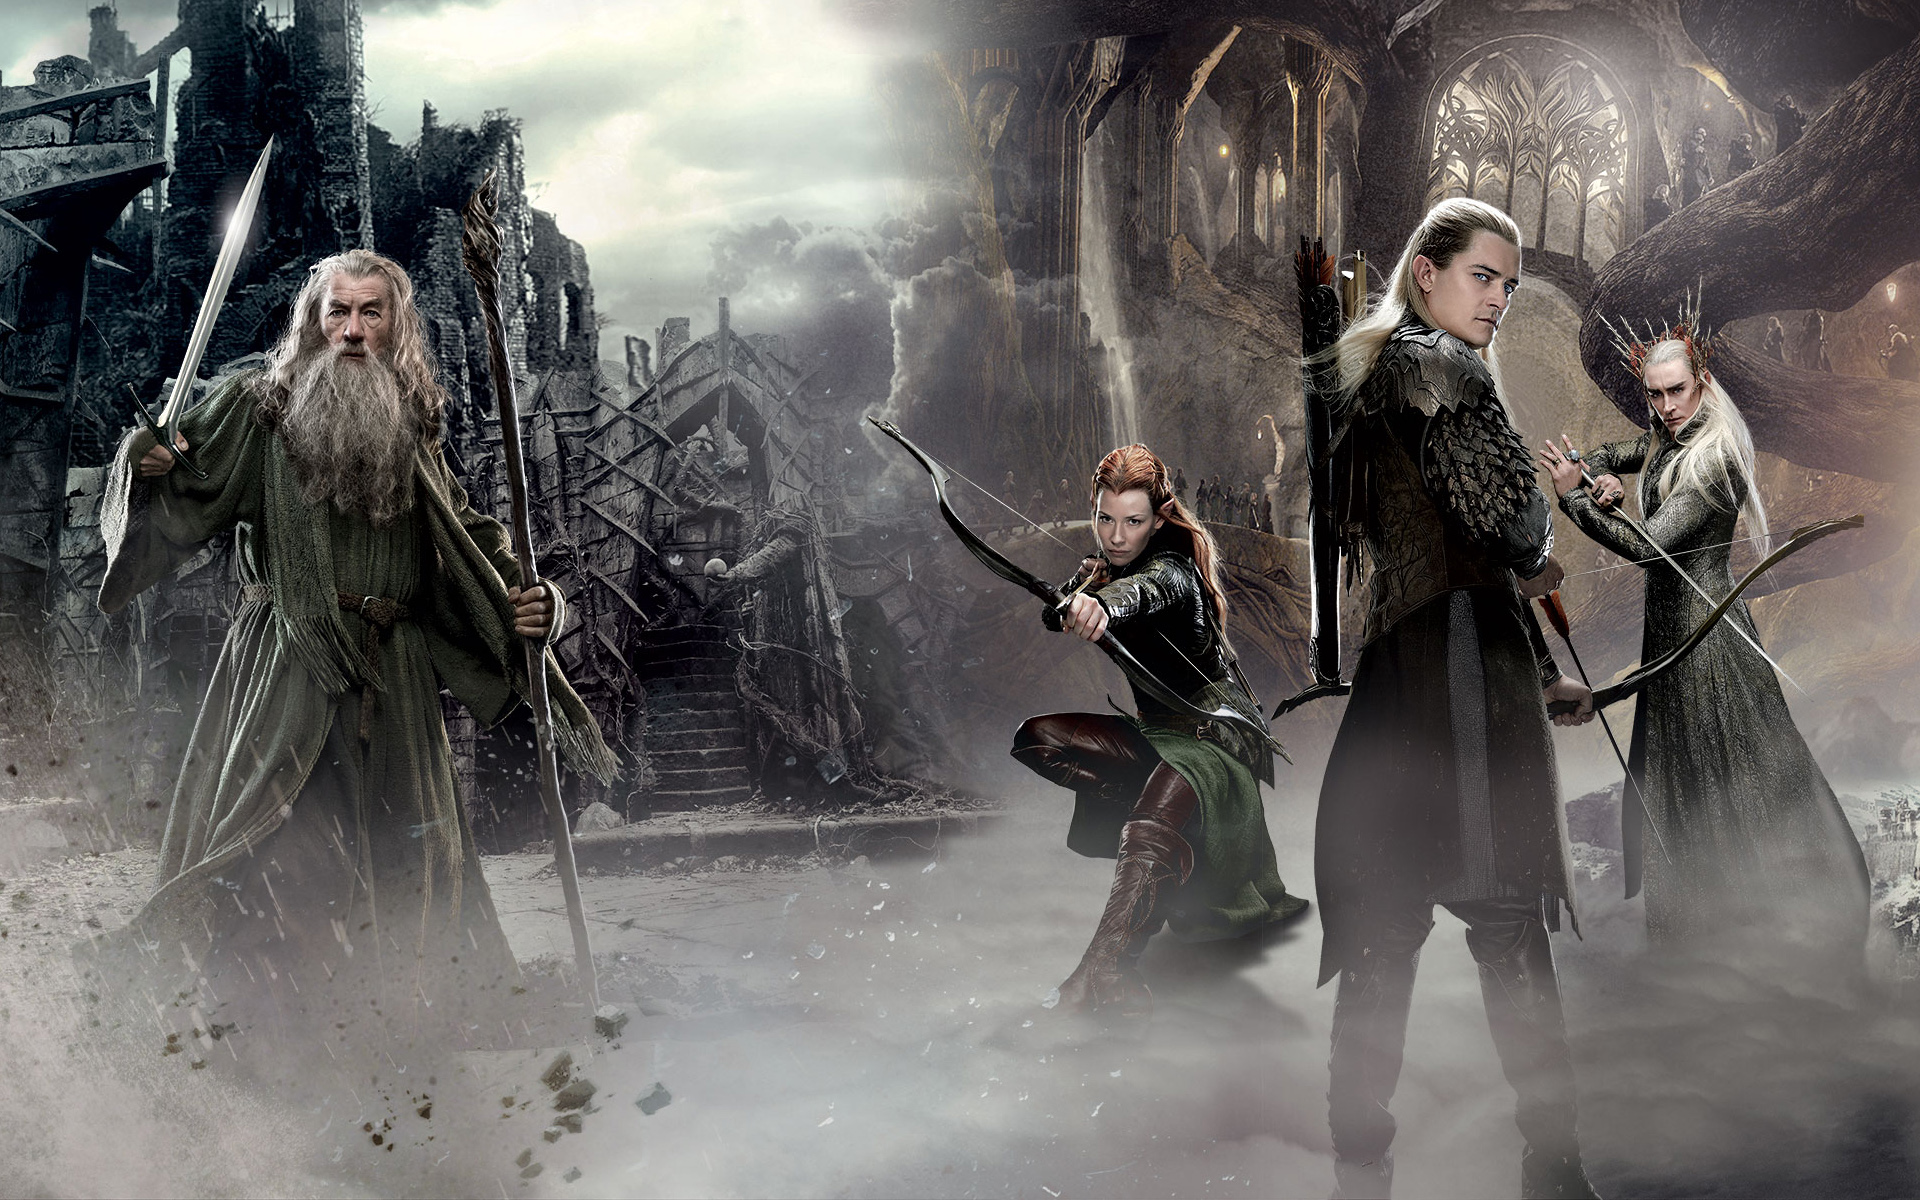 The Hobbit: The Desolation of Smaug HD Wallpaper